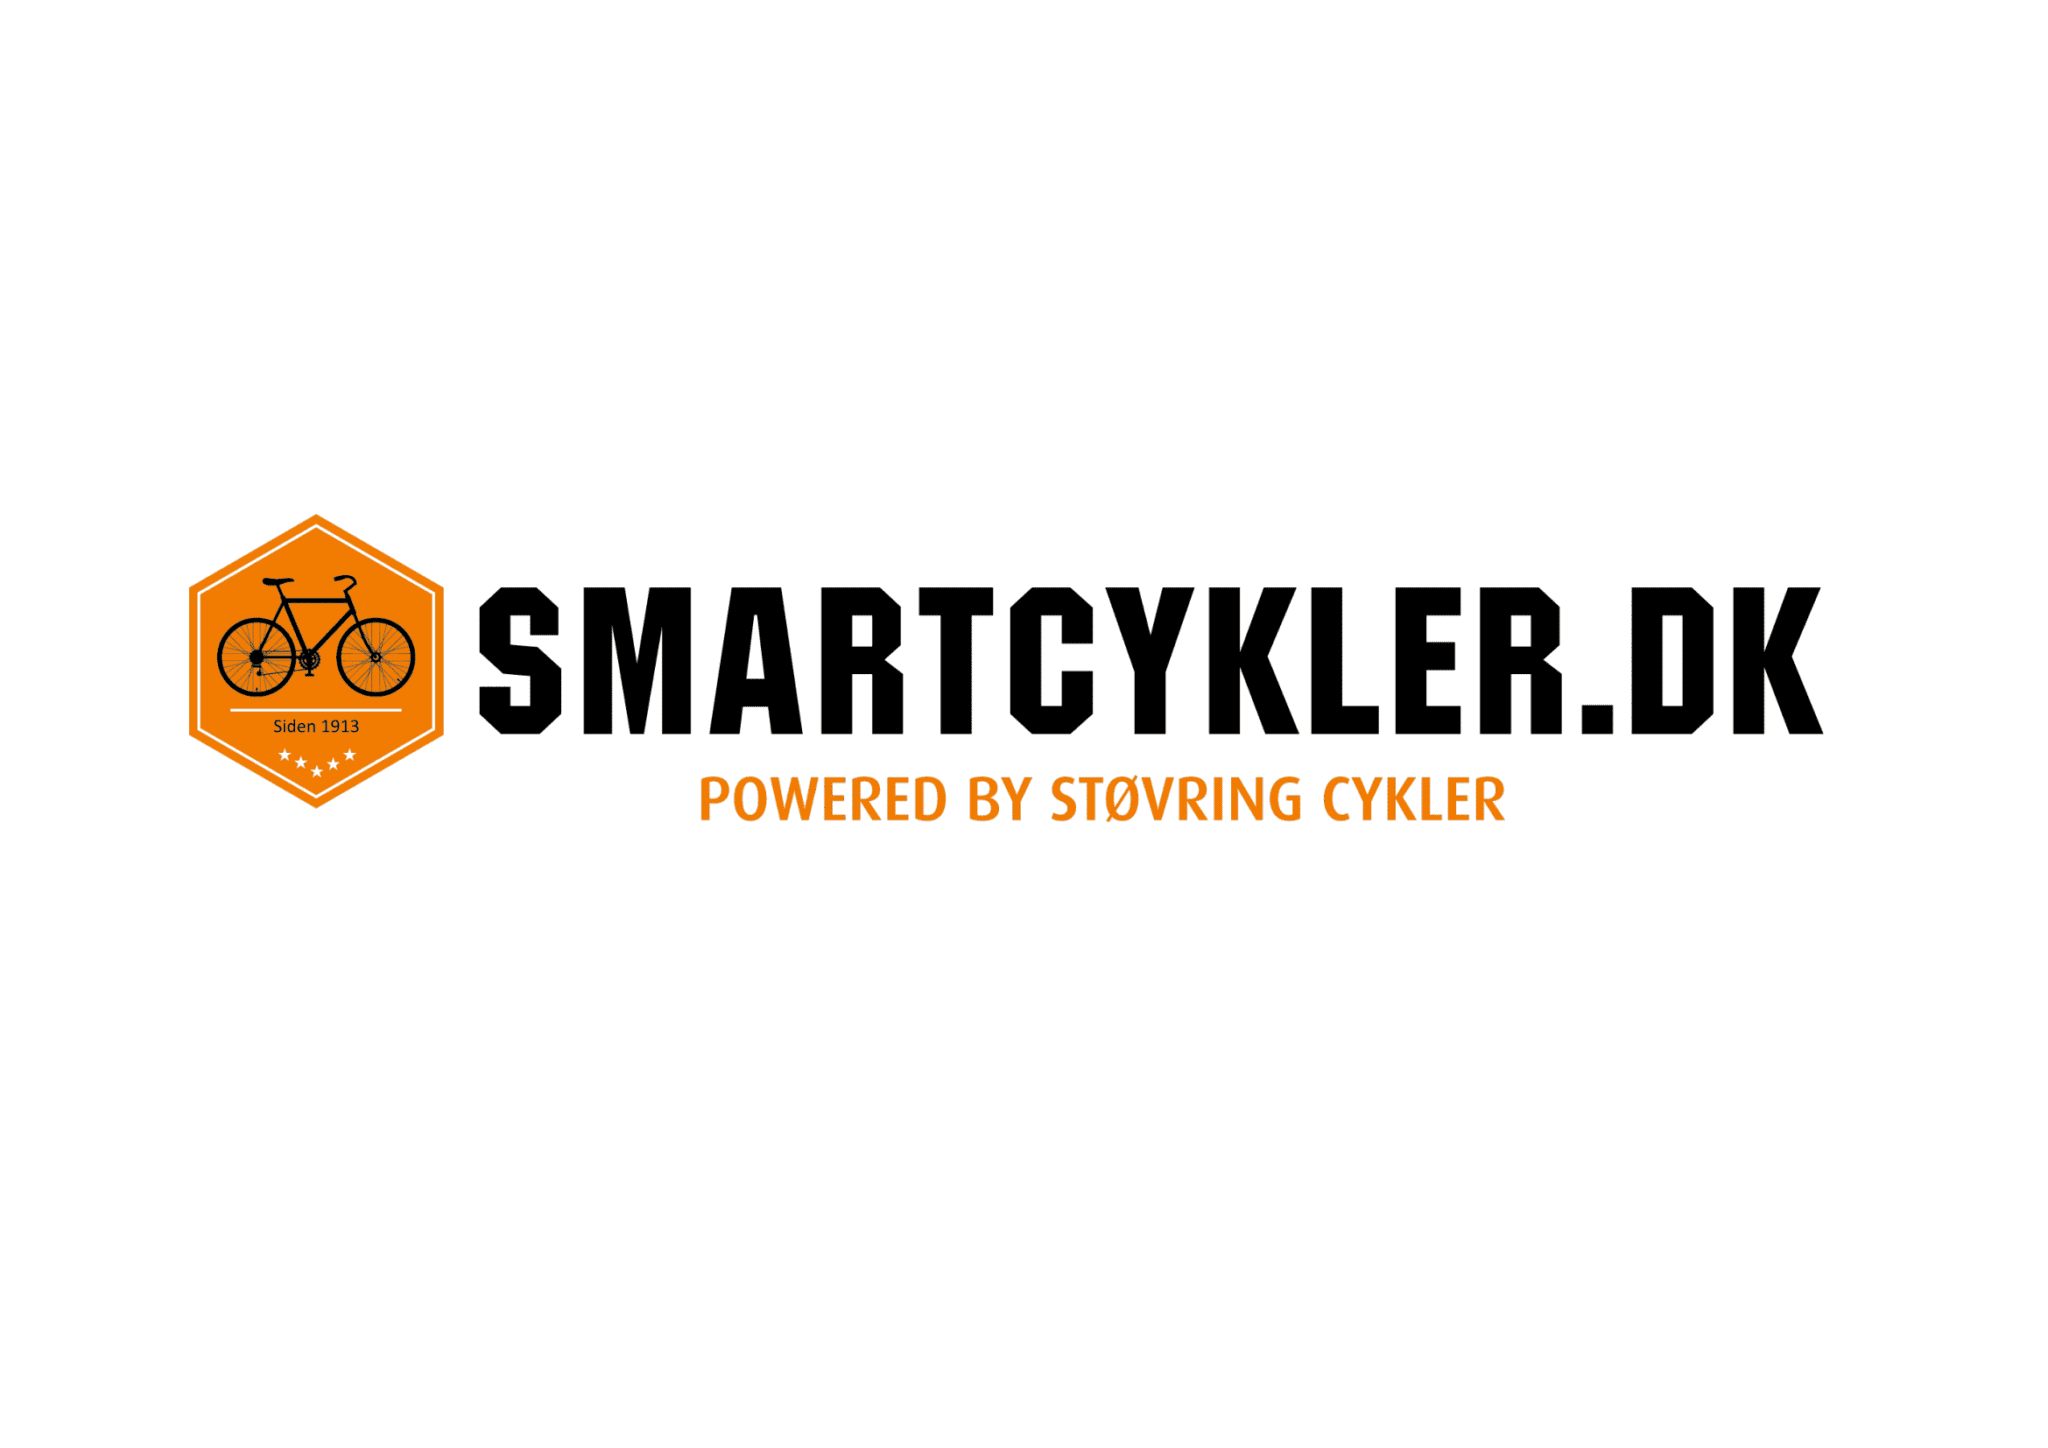 Smartcykler.dk